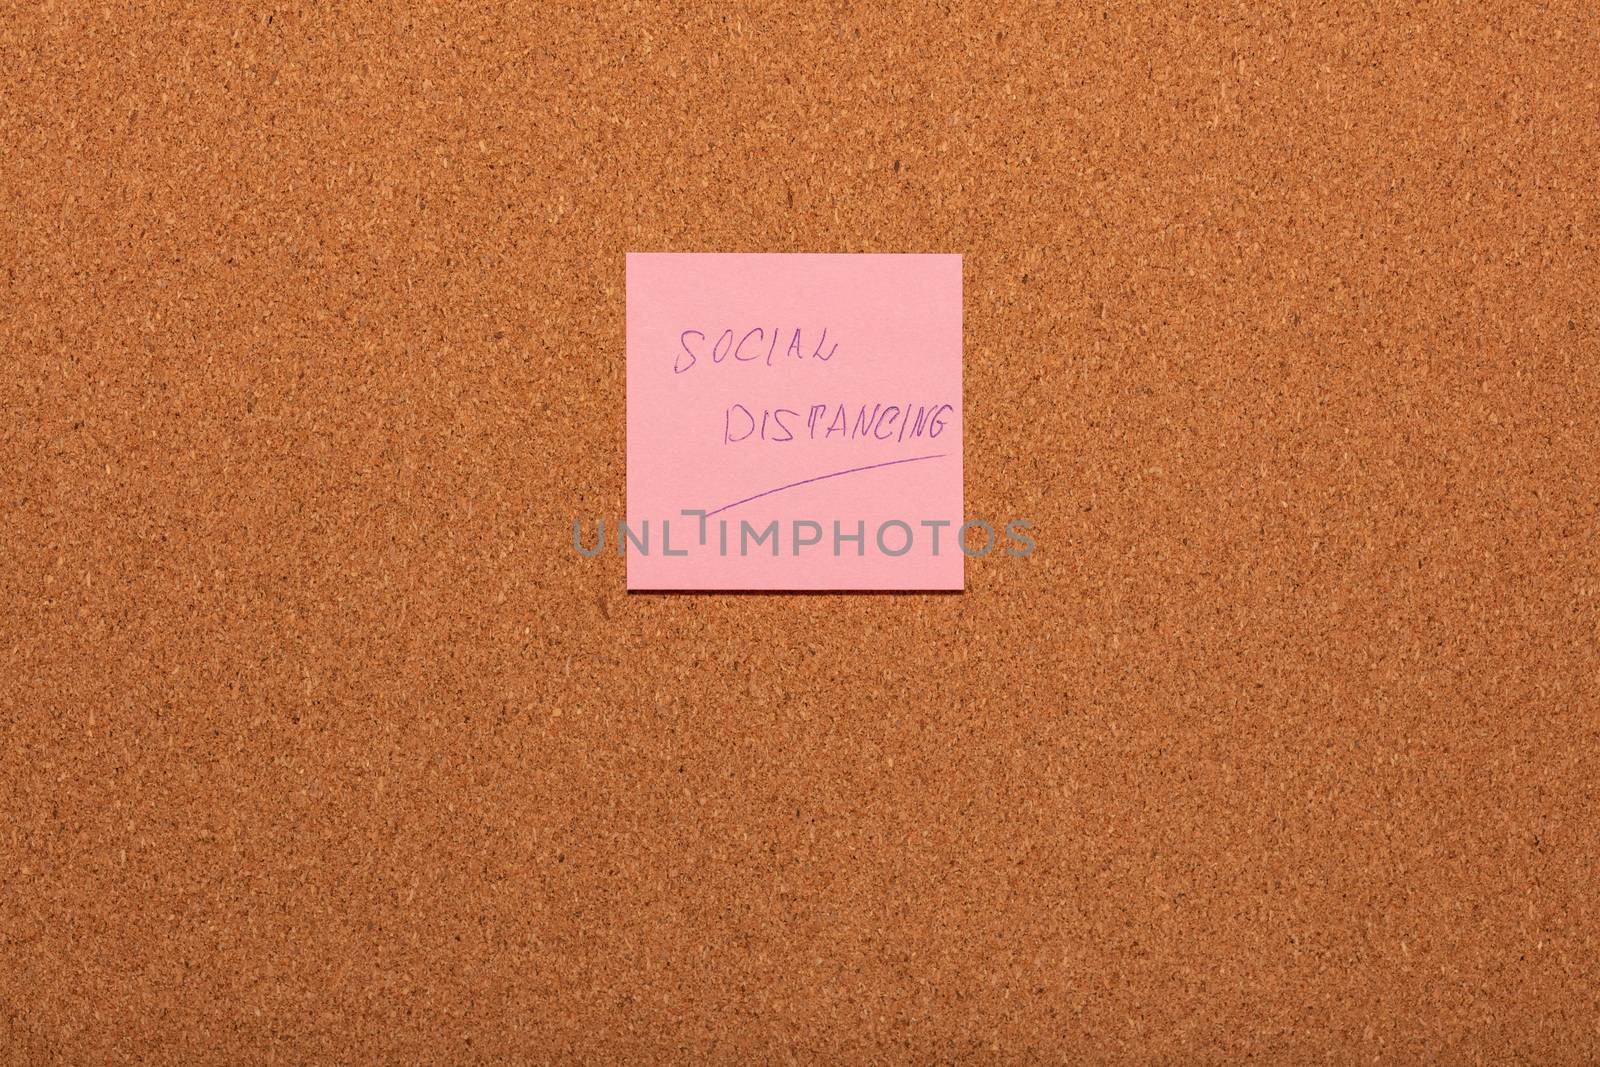 Reminder Social distancing handwritten on a pink sticker on a cork notice-board. by DamantisZ